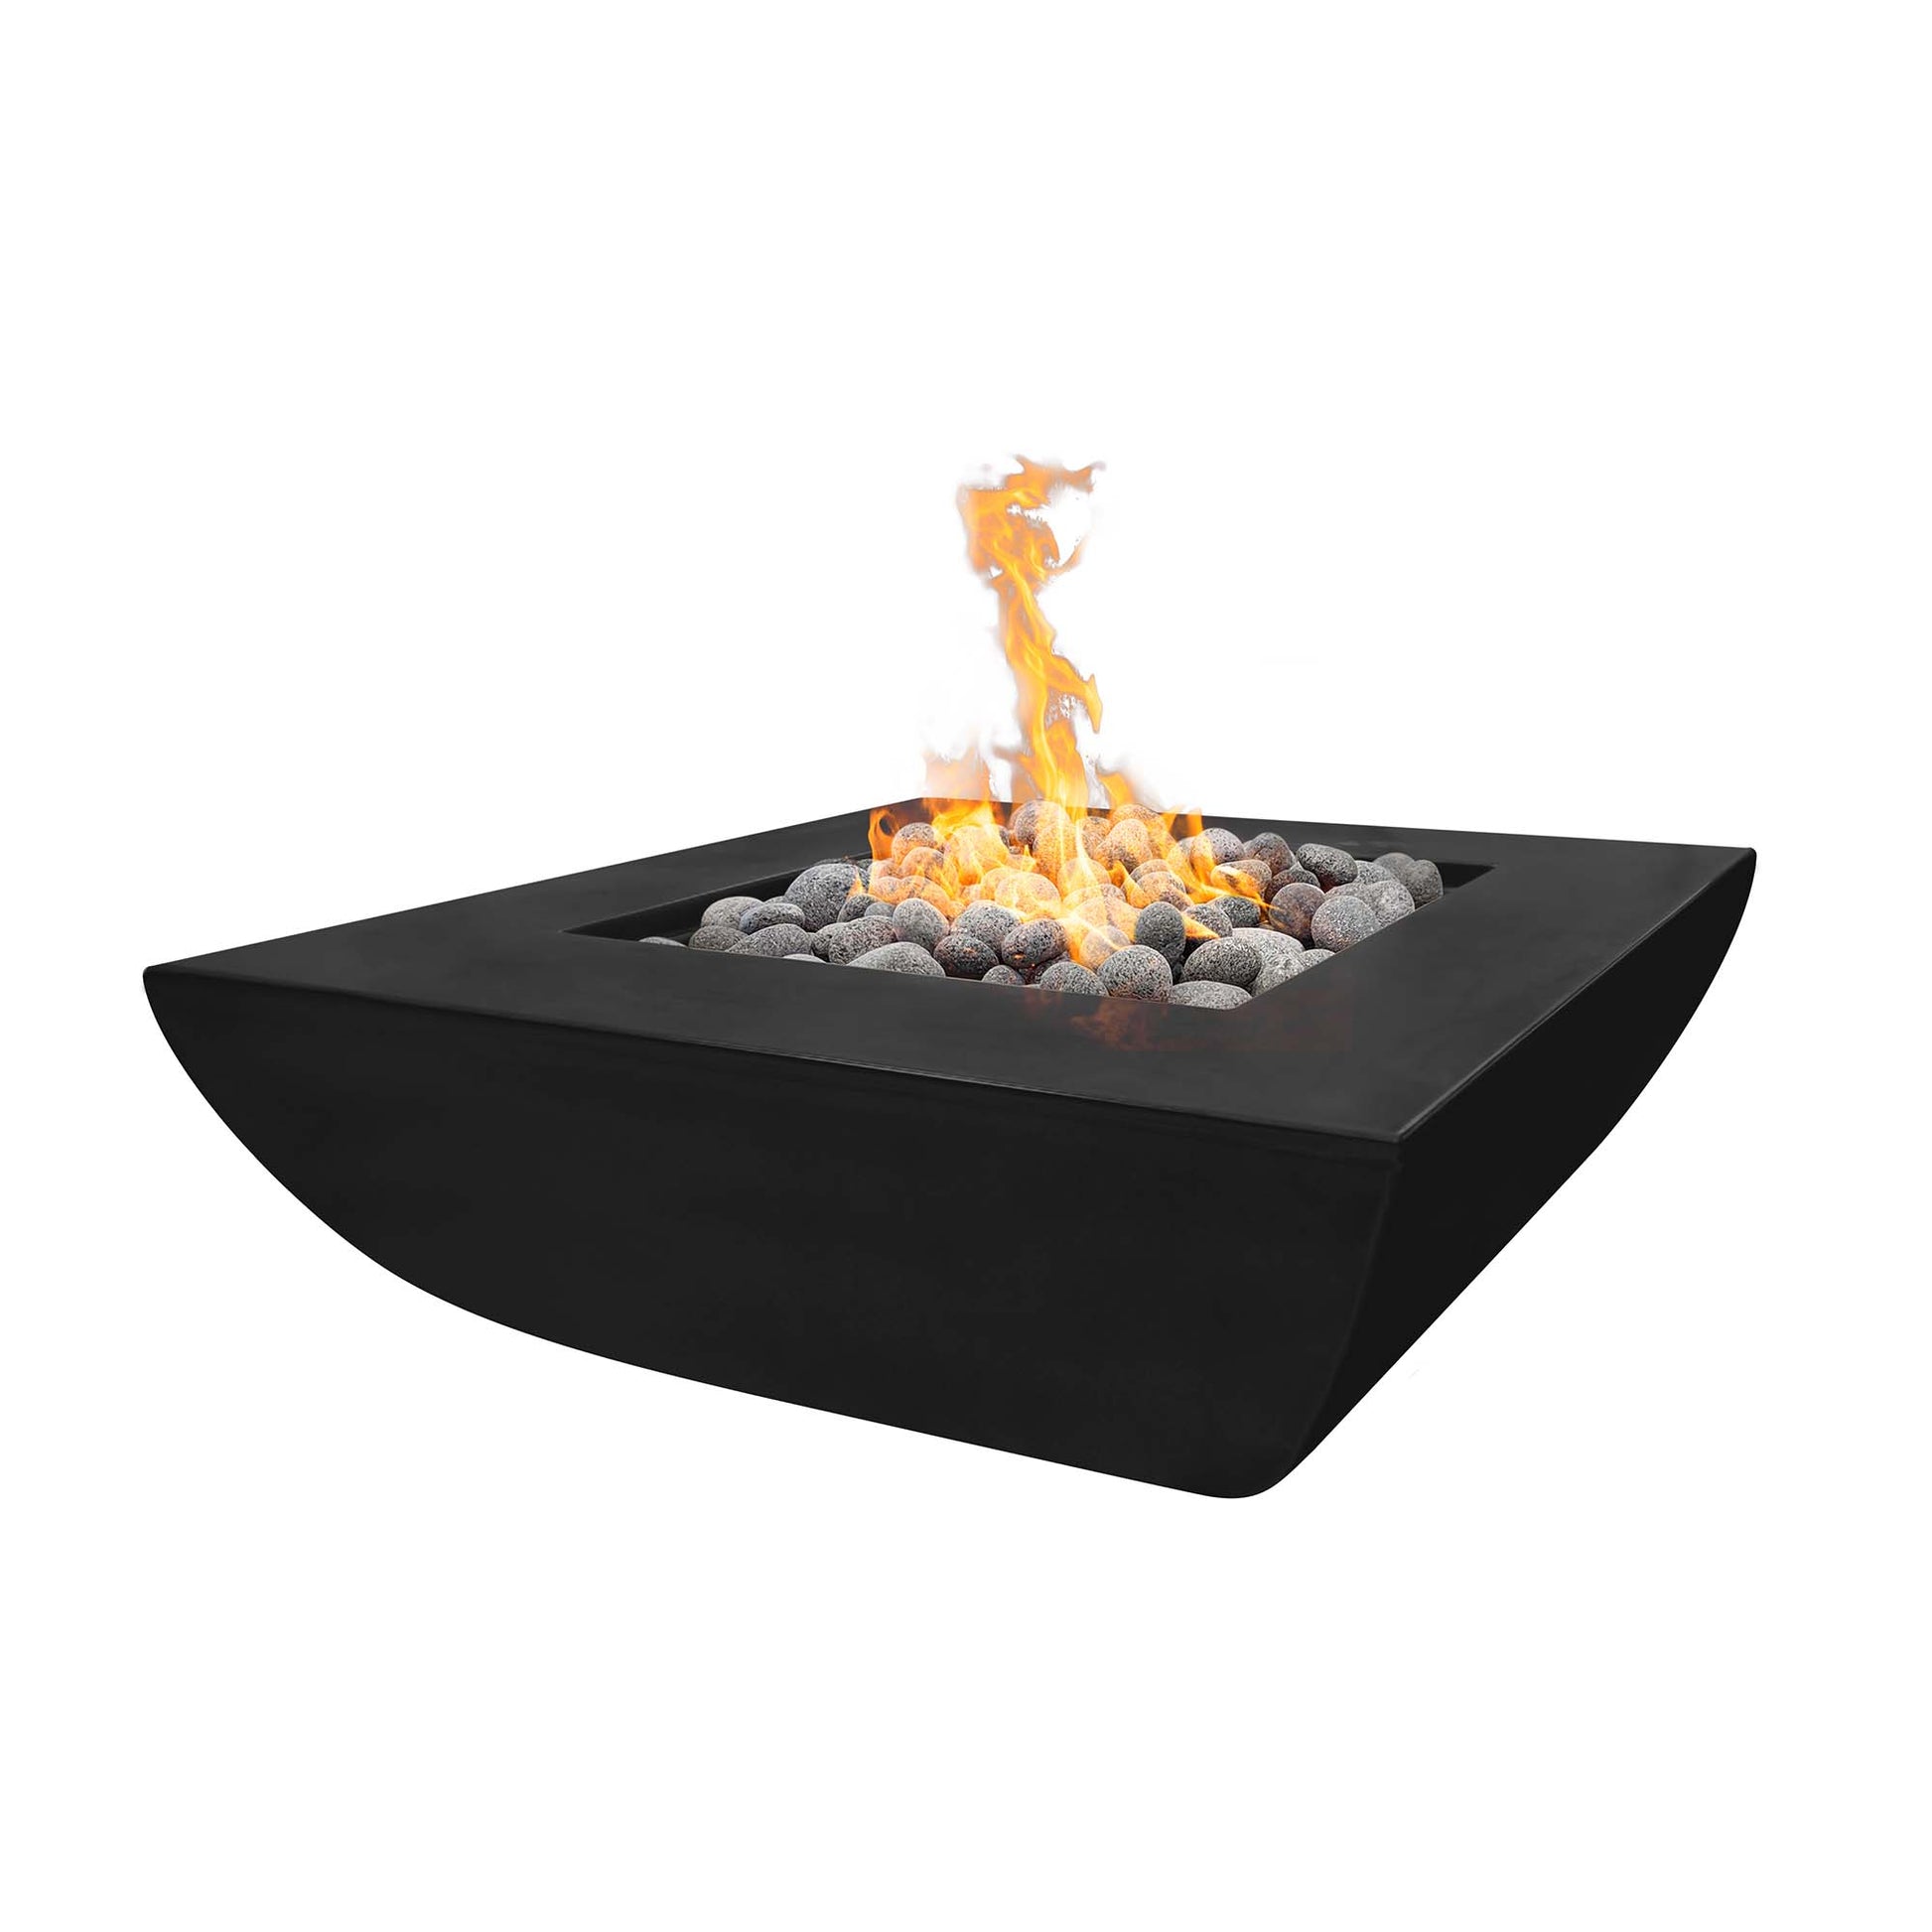 The Outdoor Plus Square Avalon 42" Ash GFRC Concrete Liquid Propane Fire Pit with Match Lit Ignition